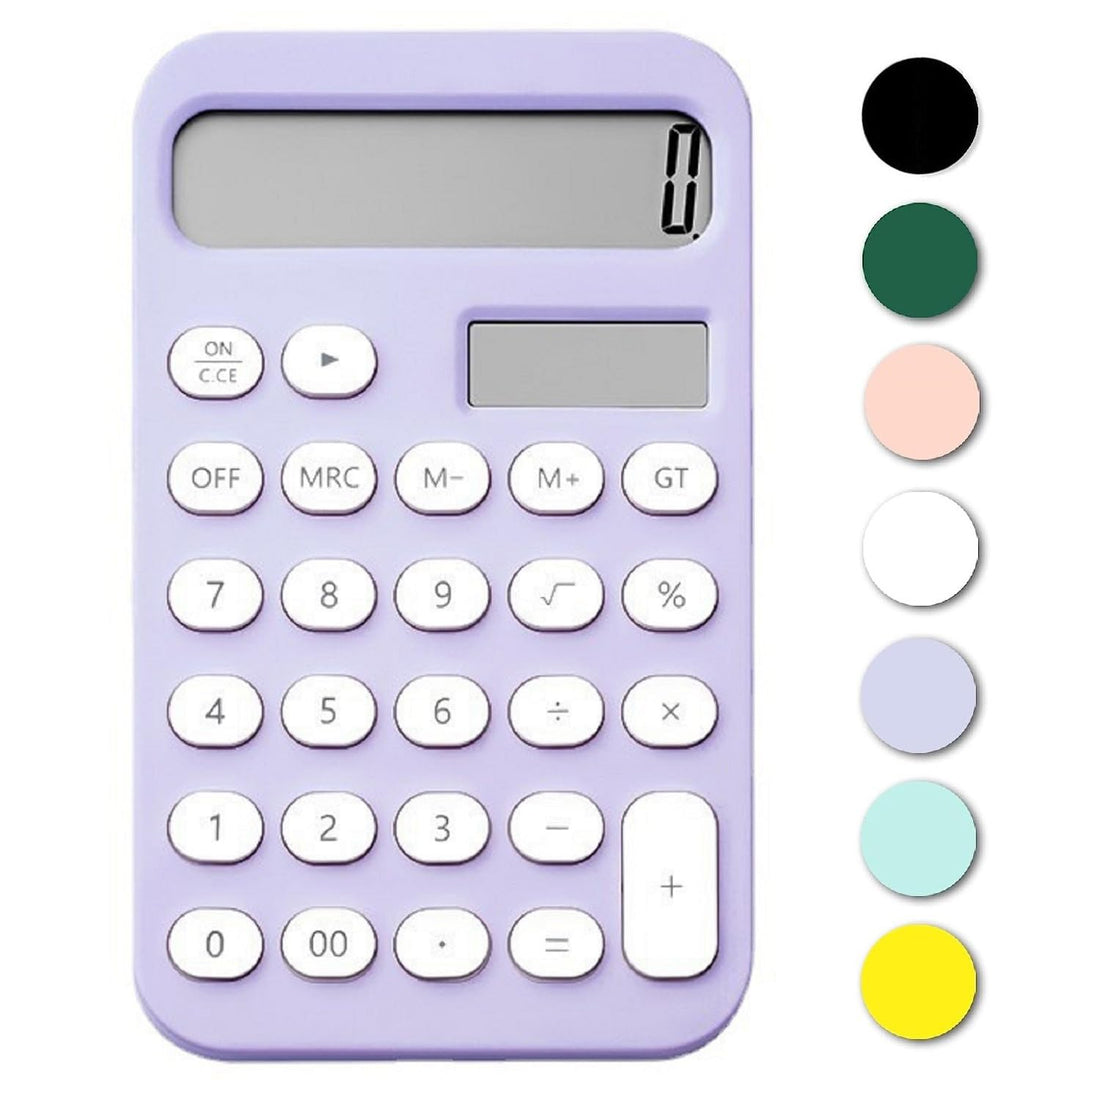 Basic Desk Calculator, Cute Pocket Calculators Desktop, 12 Digit Desktop Calculator with Large LCD Display for Office Home and School (Purple)